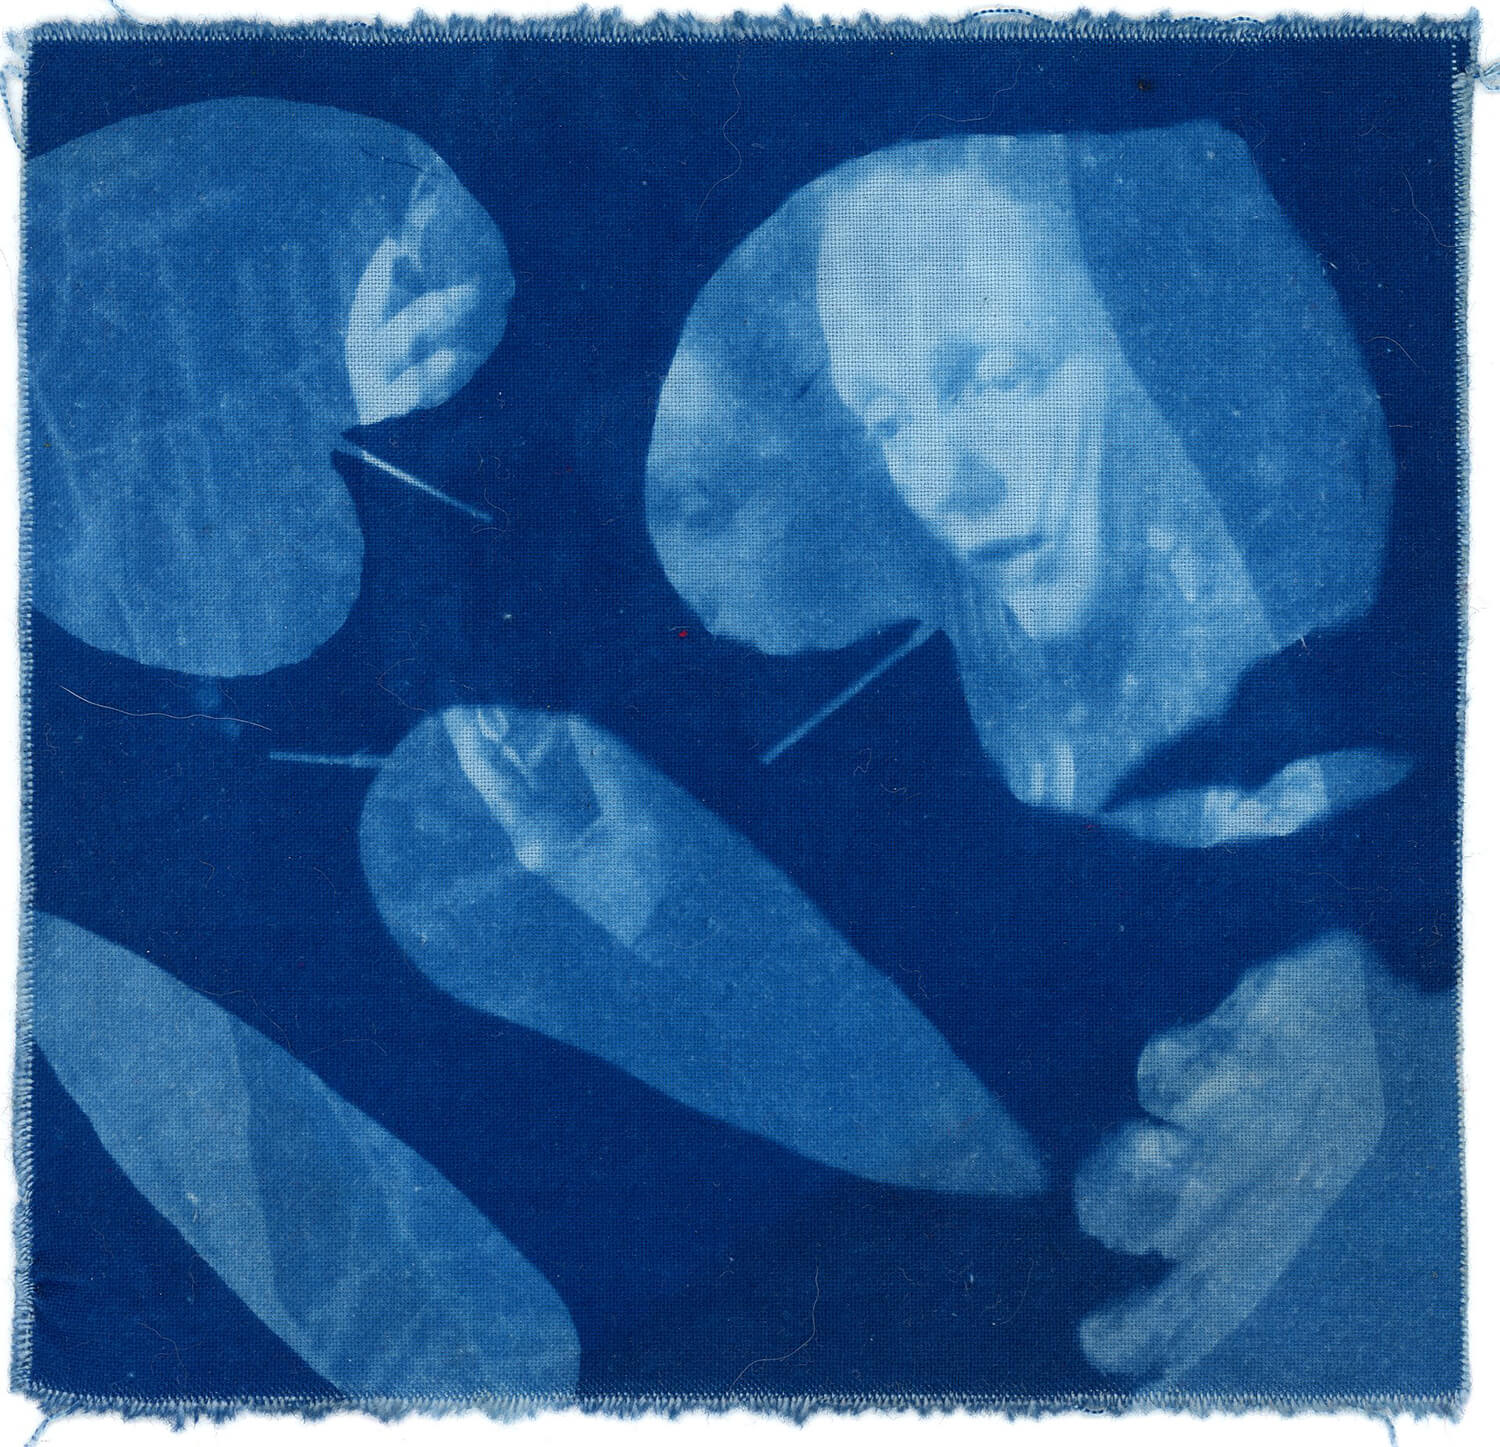 Reflections, 2021, Cyanotype on Cotton,  15x15cm.  $150